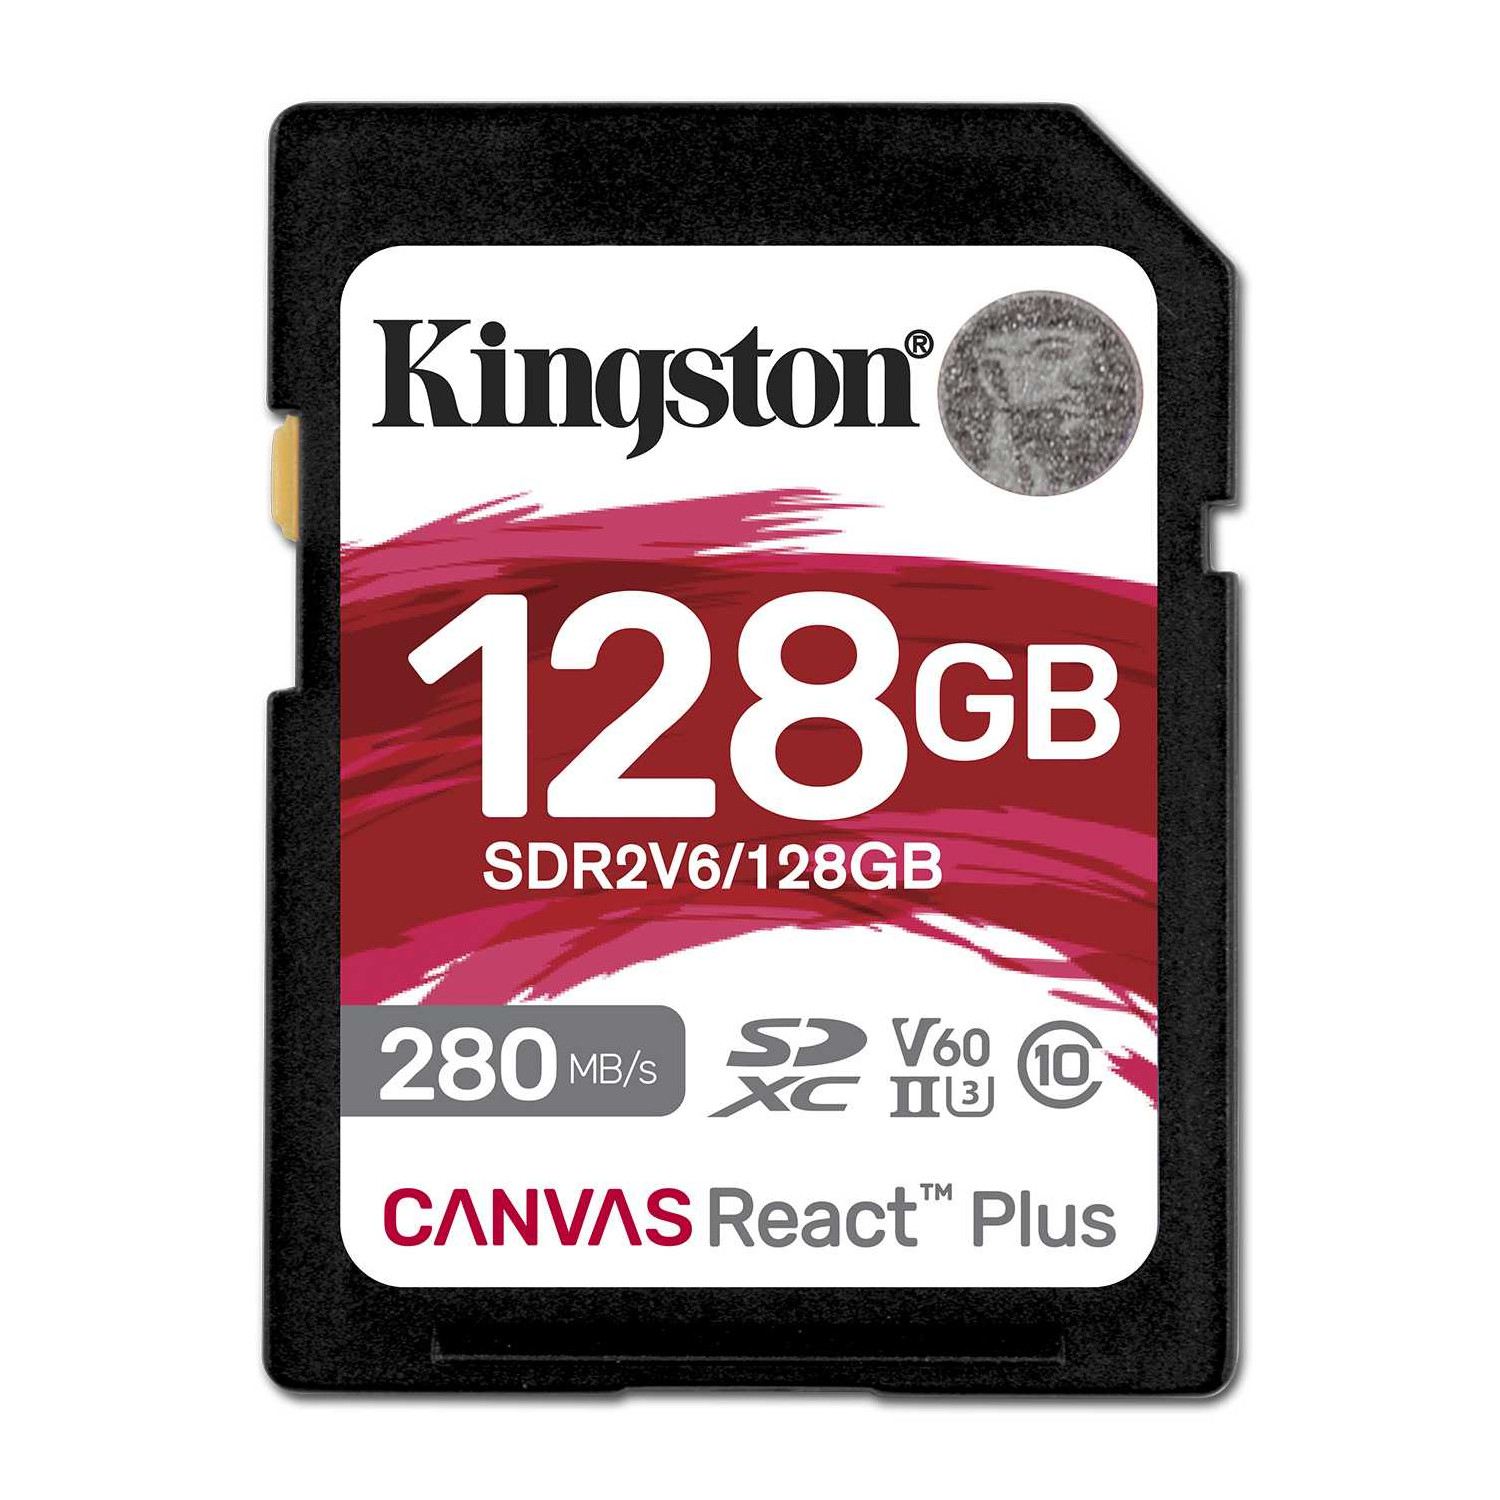 Kingston - SDR2V6-128GB -   